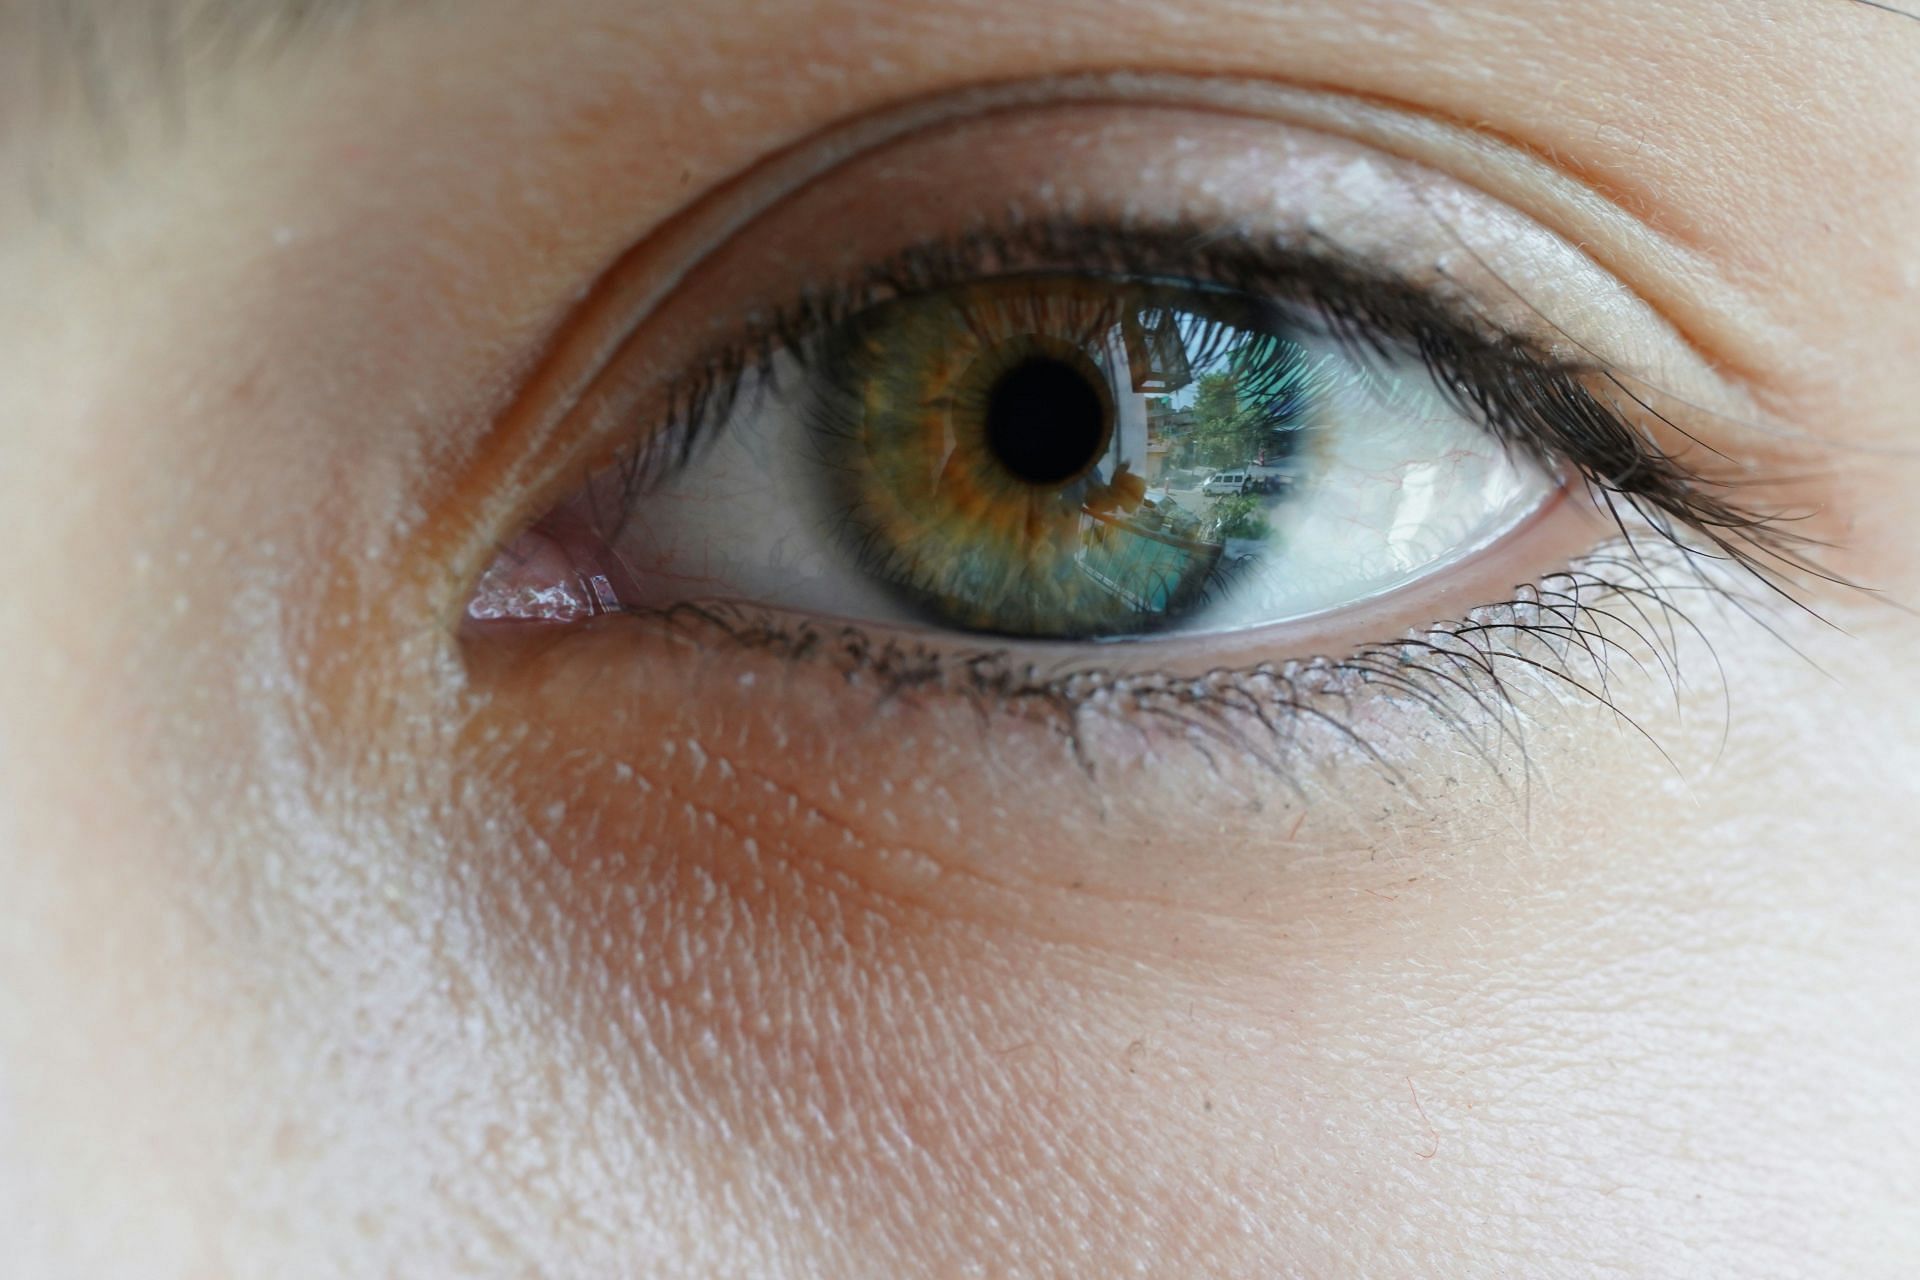 UV rays can damage the eyes(Image by Pranav Kumar Jain/Unsplash)